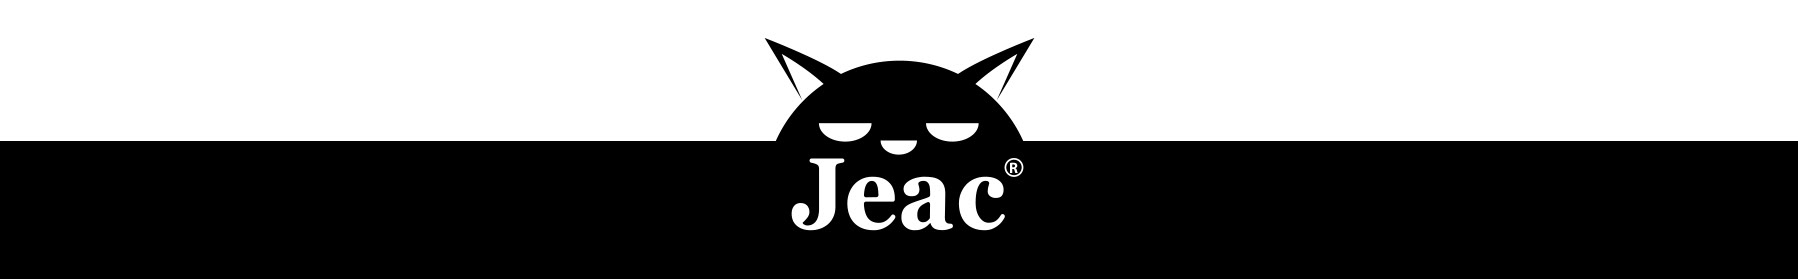 JEAC NEW のプロファイルバナー